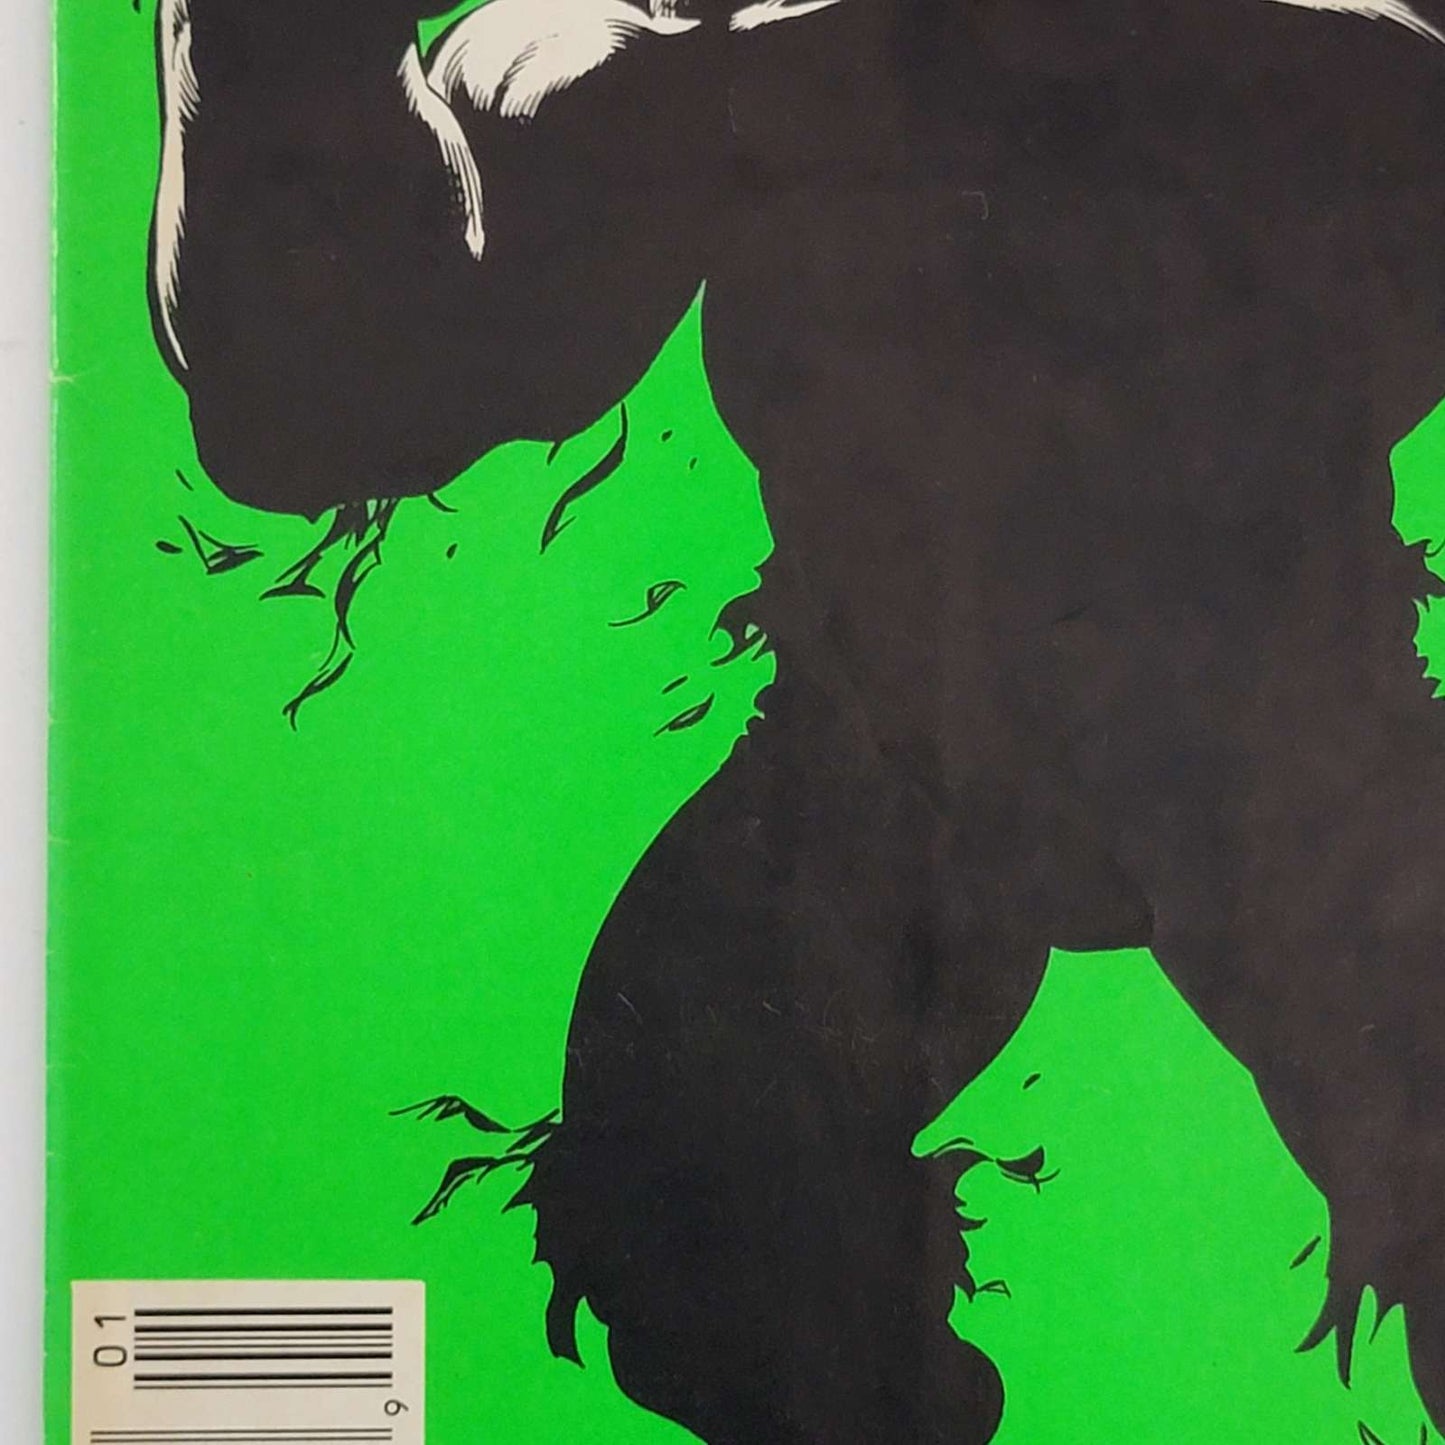 Incredible Hulk, the #377